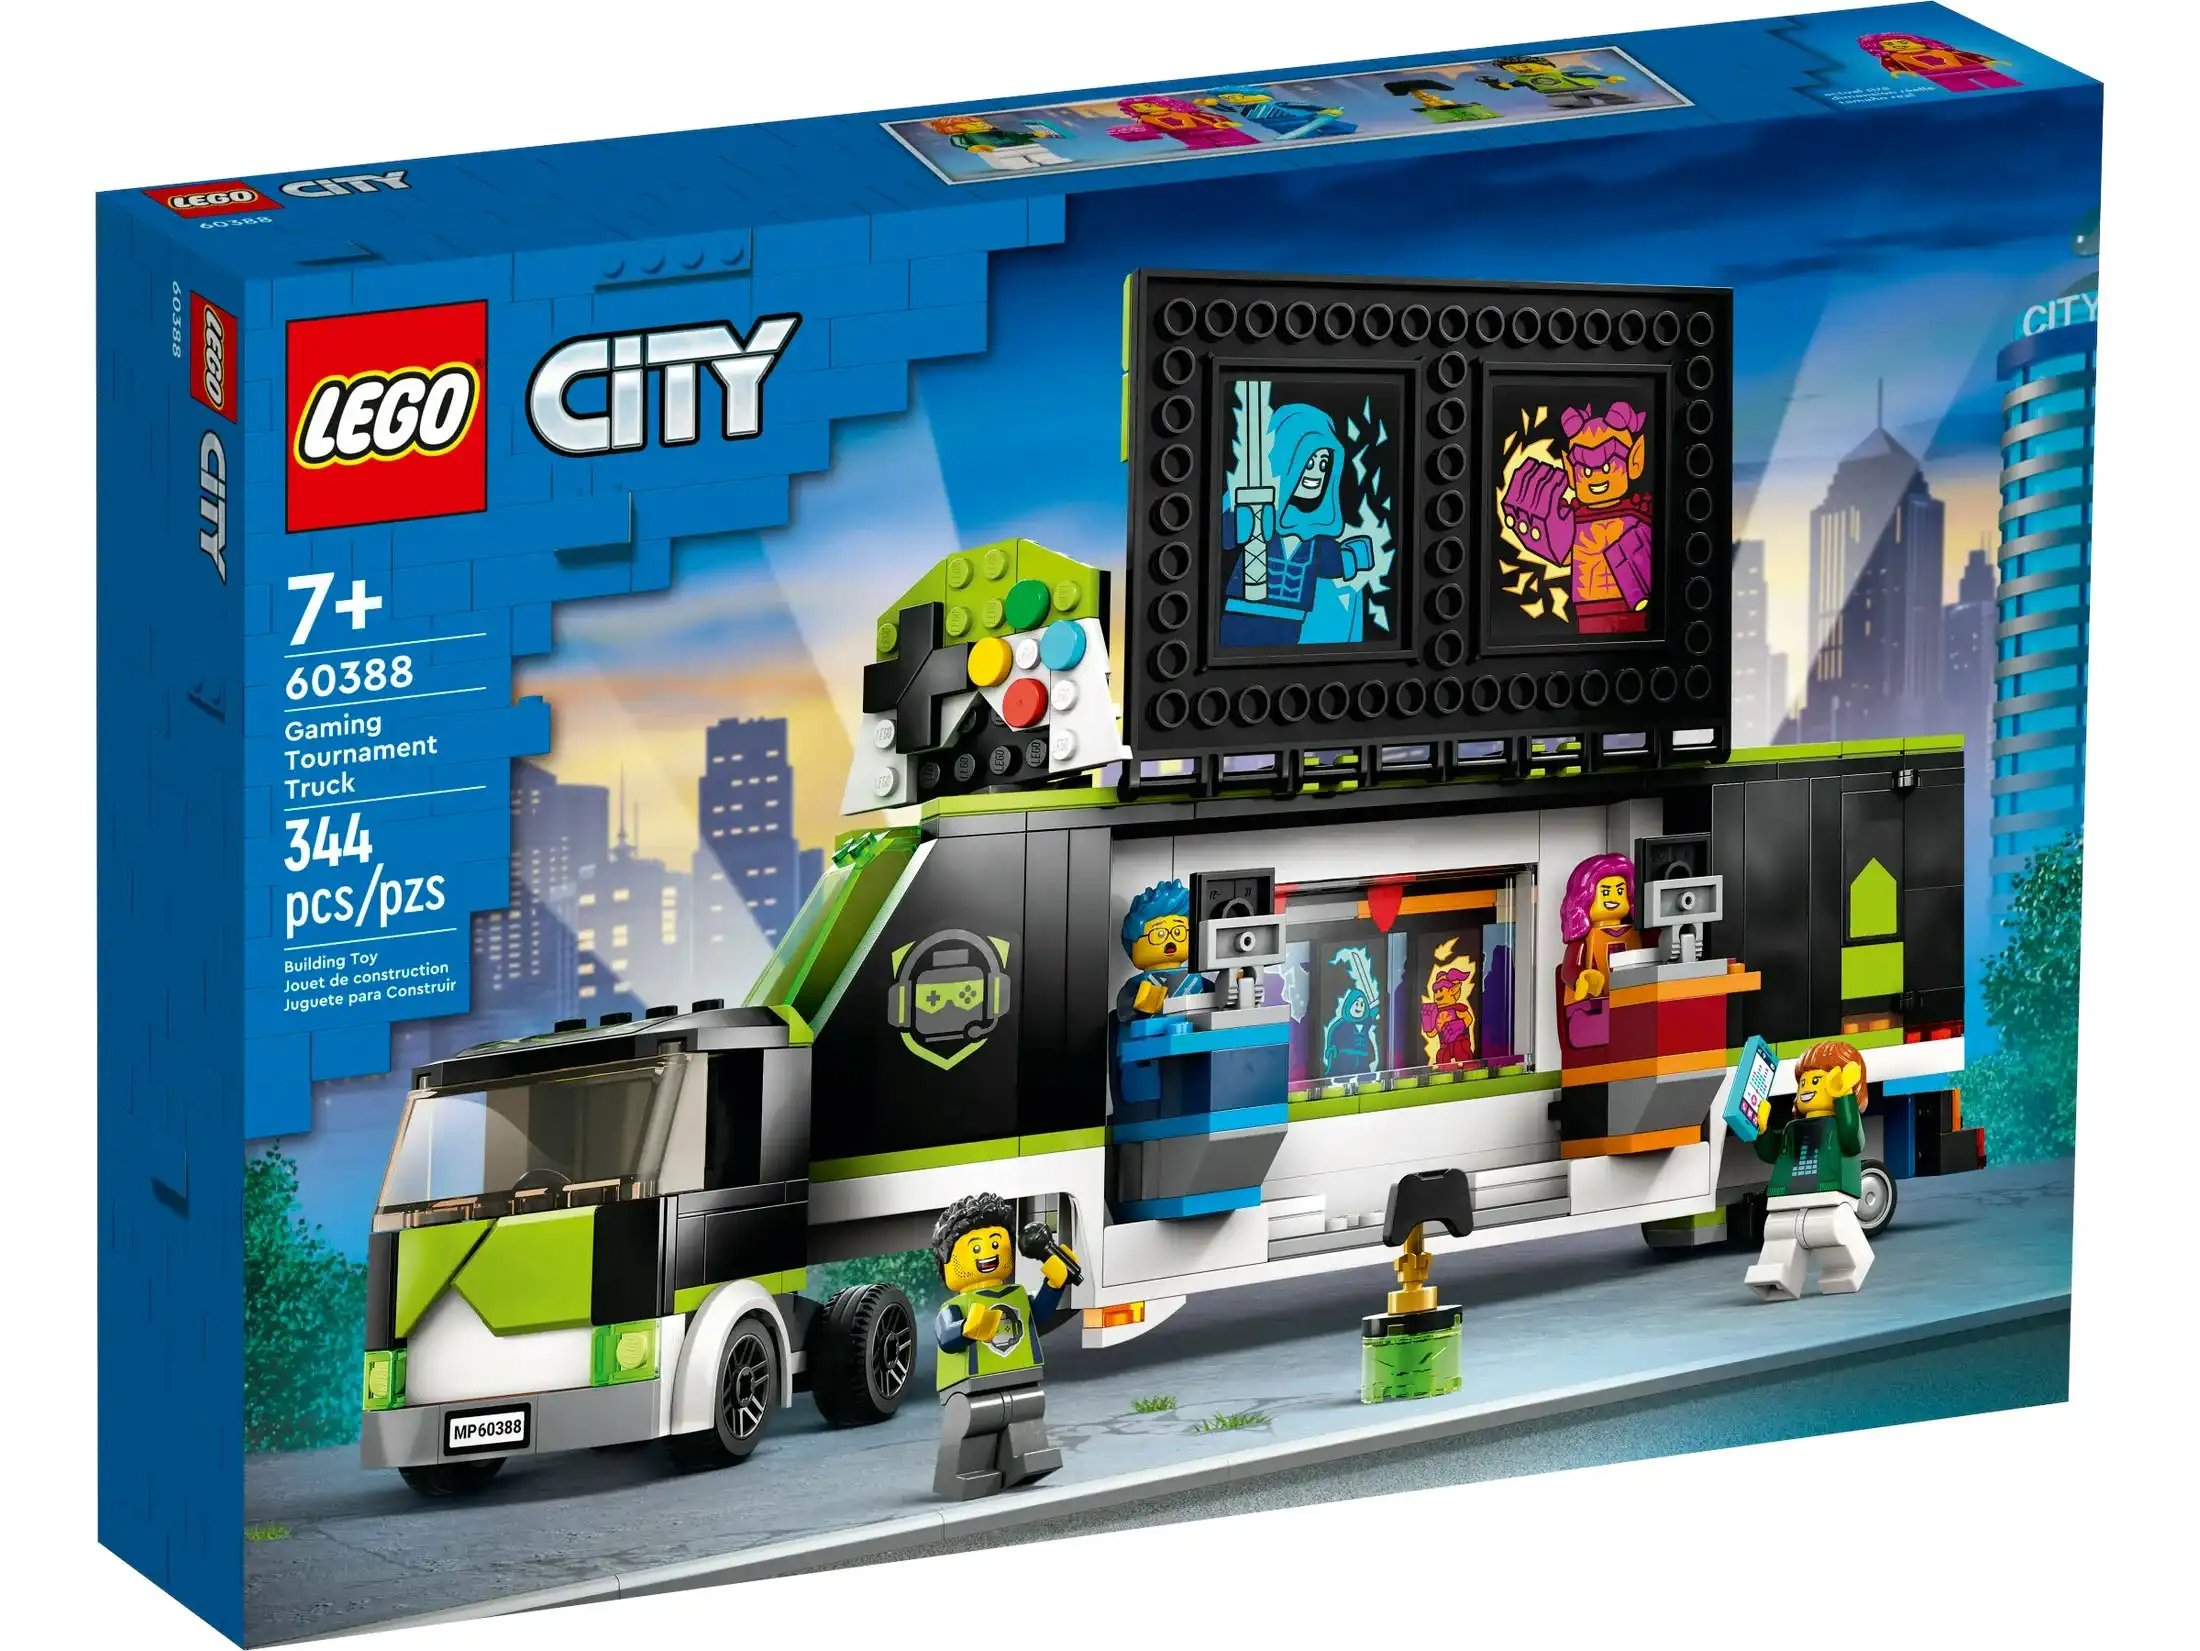 LEGO 60388 Gaming Tournament Truck - City